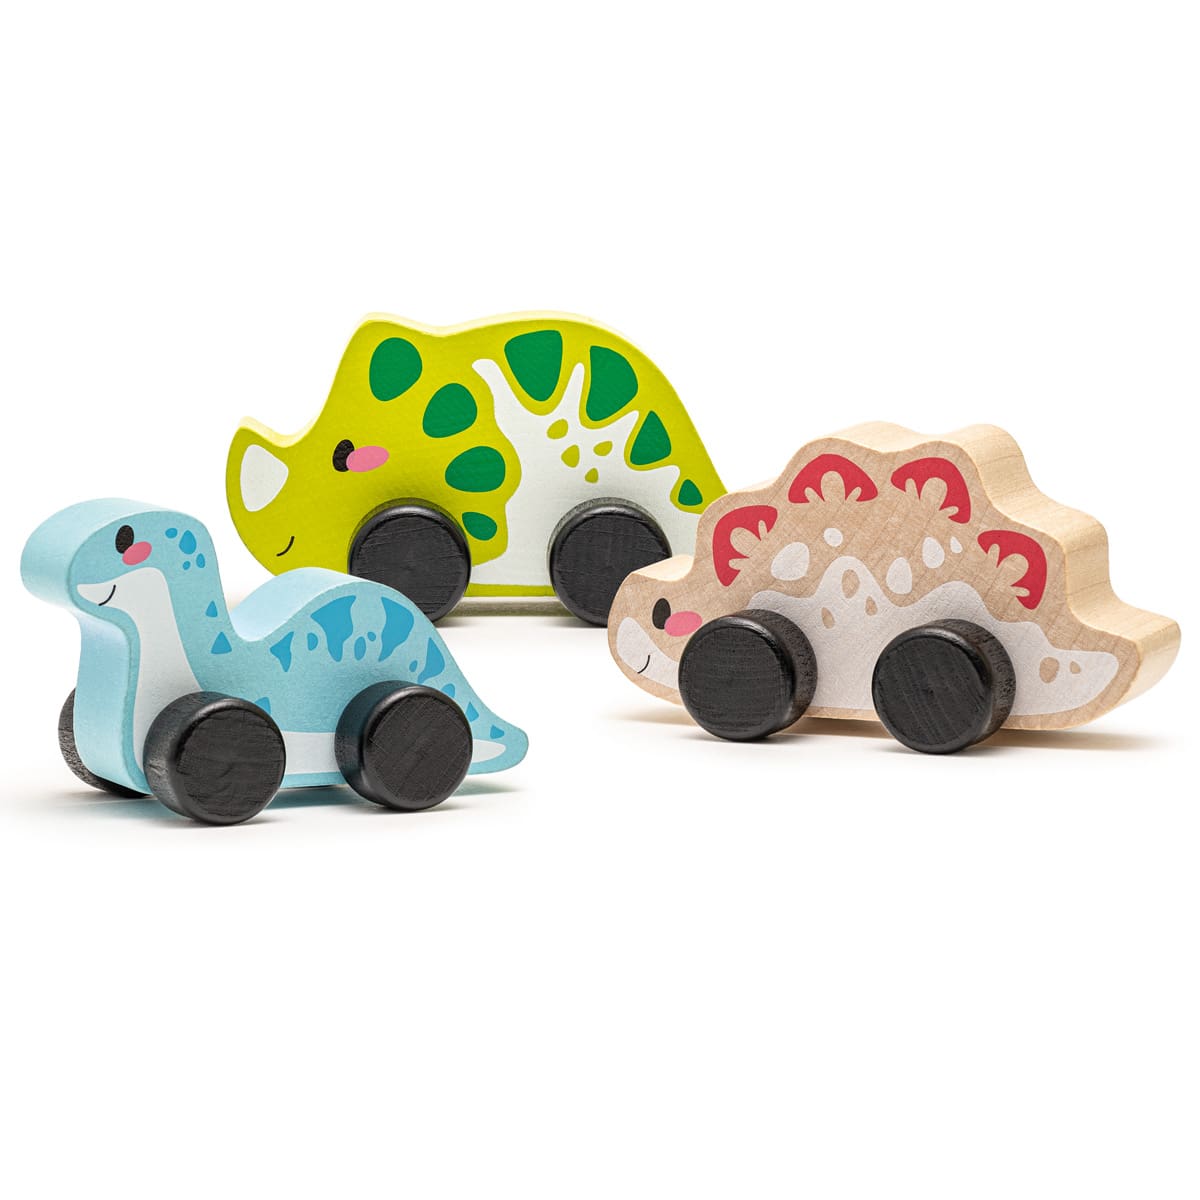 Wooden Dinosaurs on Wheels